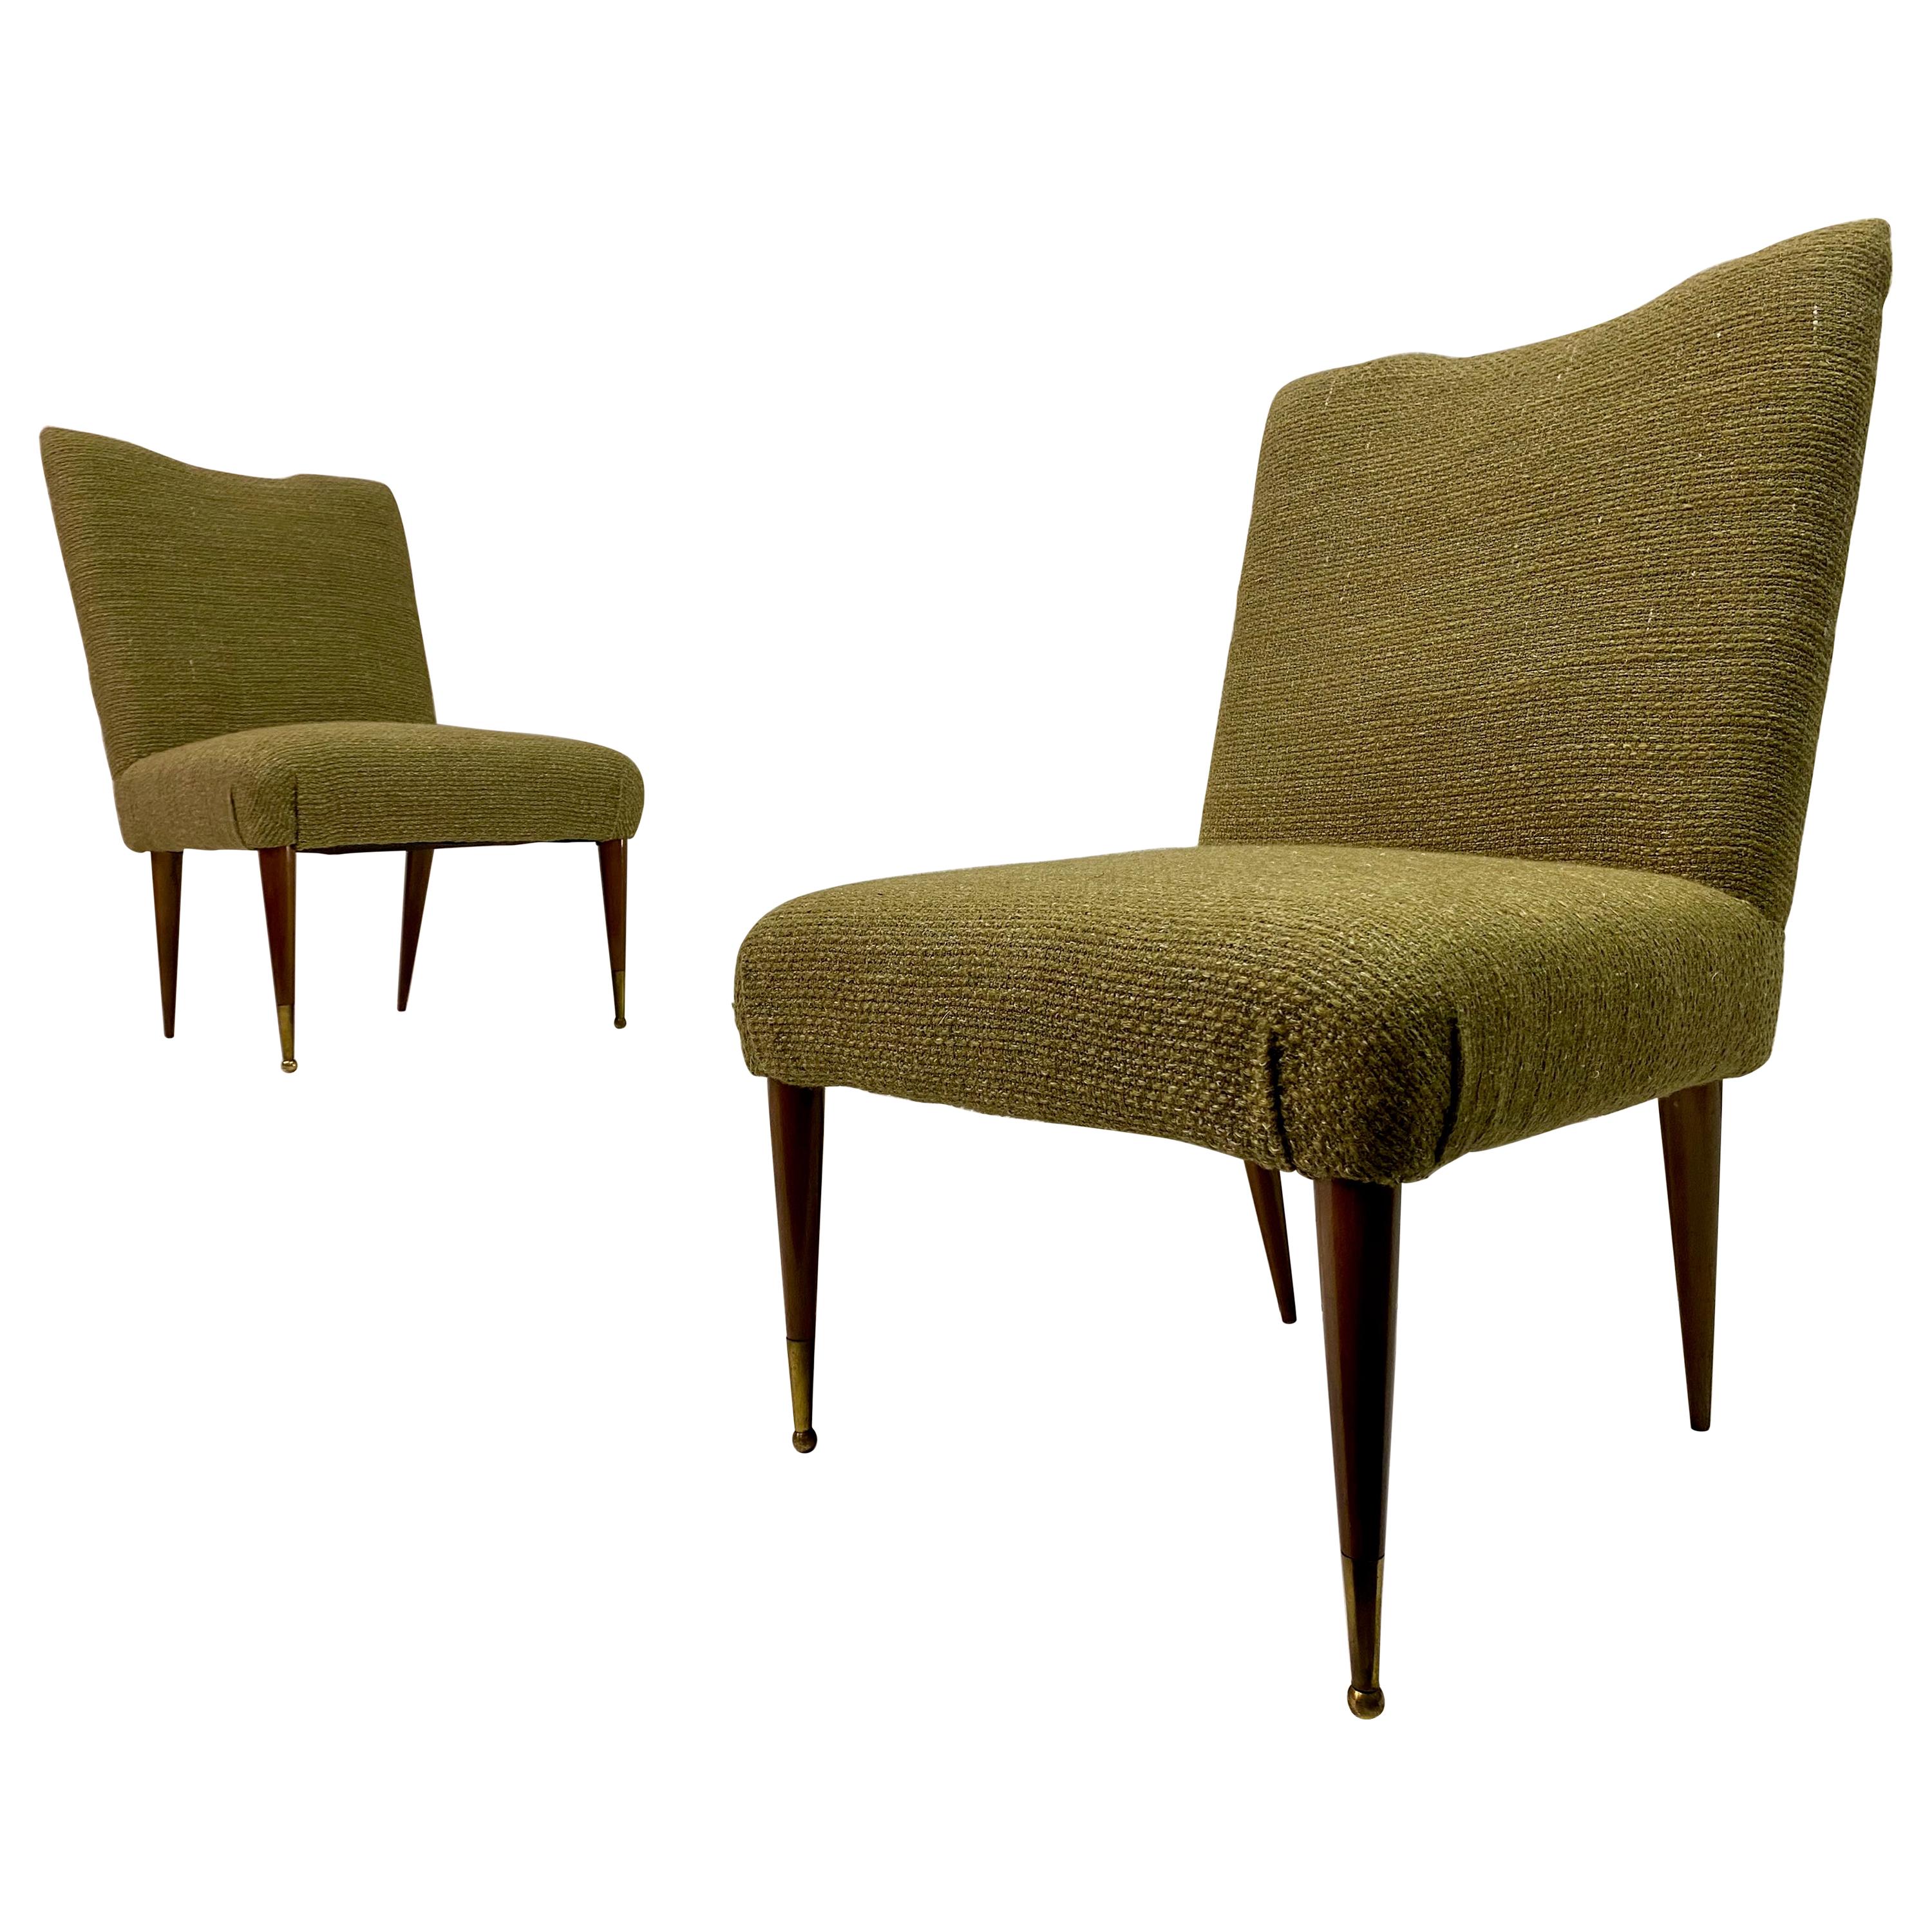 Midcentury Pair of Italian 1950s Slipper Chairs in Green Wool Linen Blend